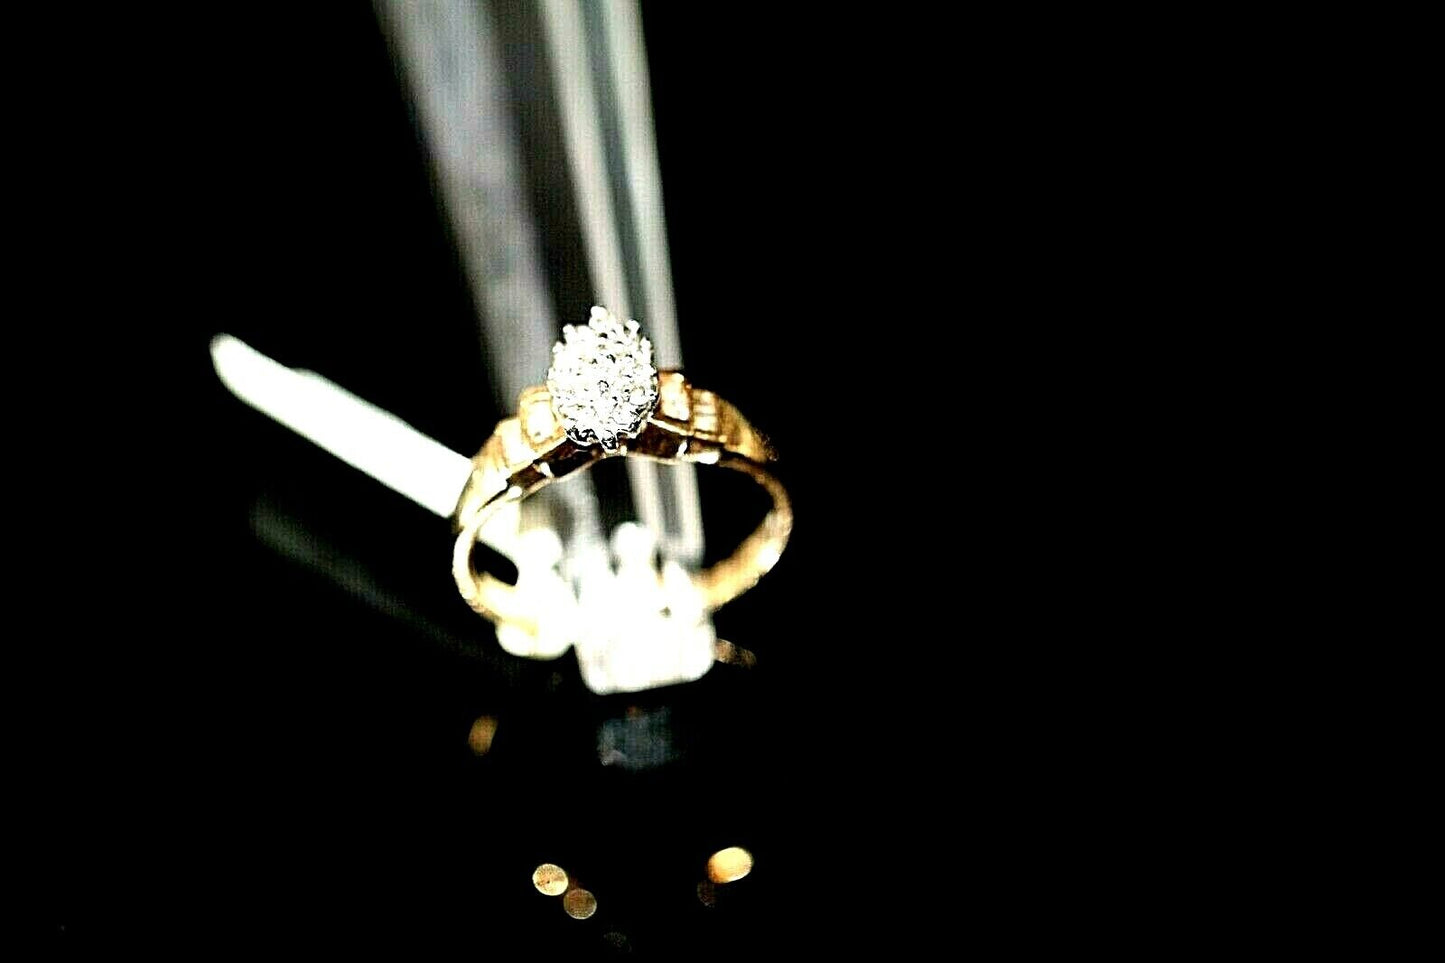 *VINTAGE* 10K Yellow Gold 1/4CT Natural Diamond Wedding Ring Size 7.75